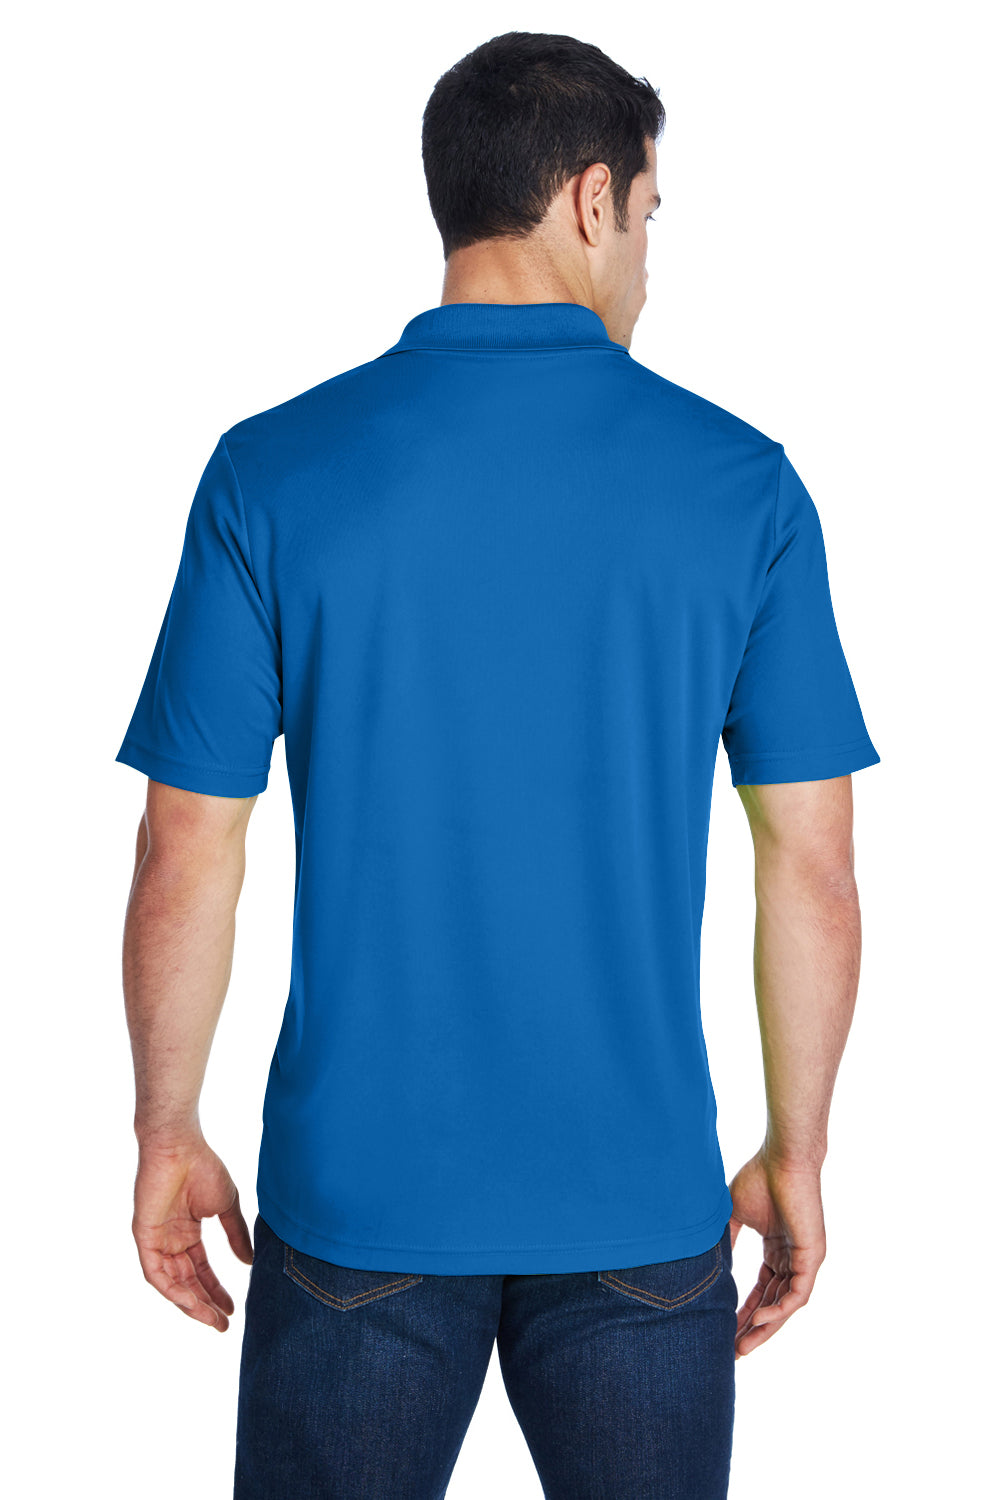 Core 365 88181 Mens Origin Performance Moisture Wicking Short Sleeve Polo Shirt Royal Blue Back